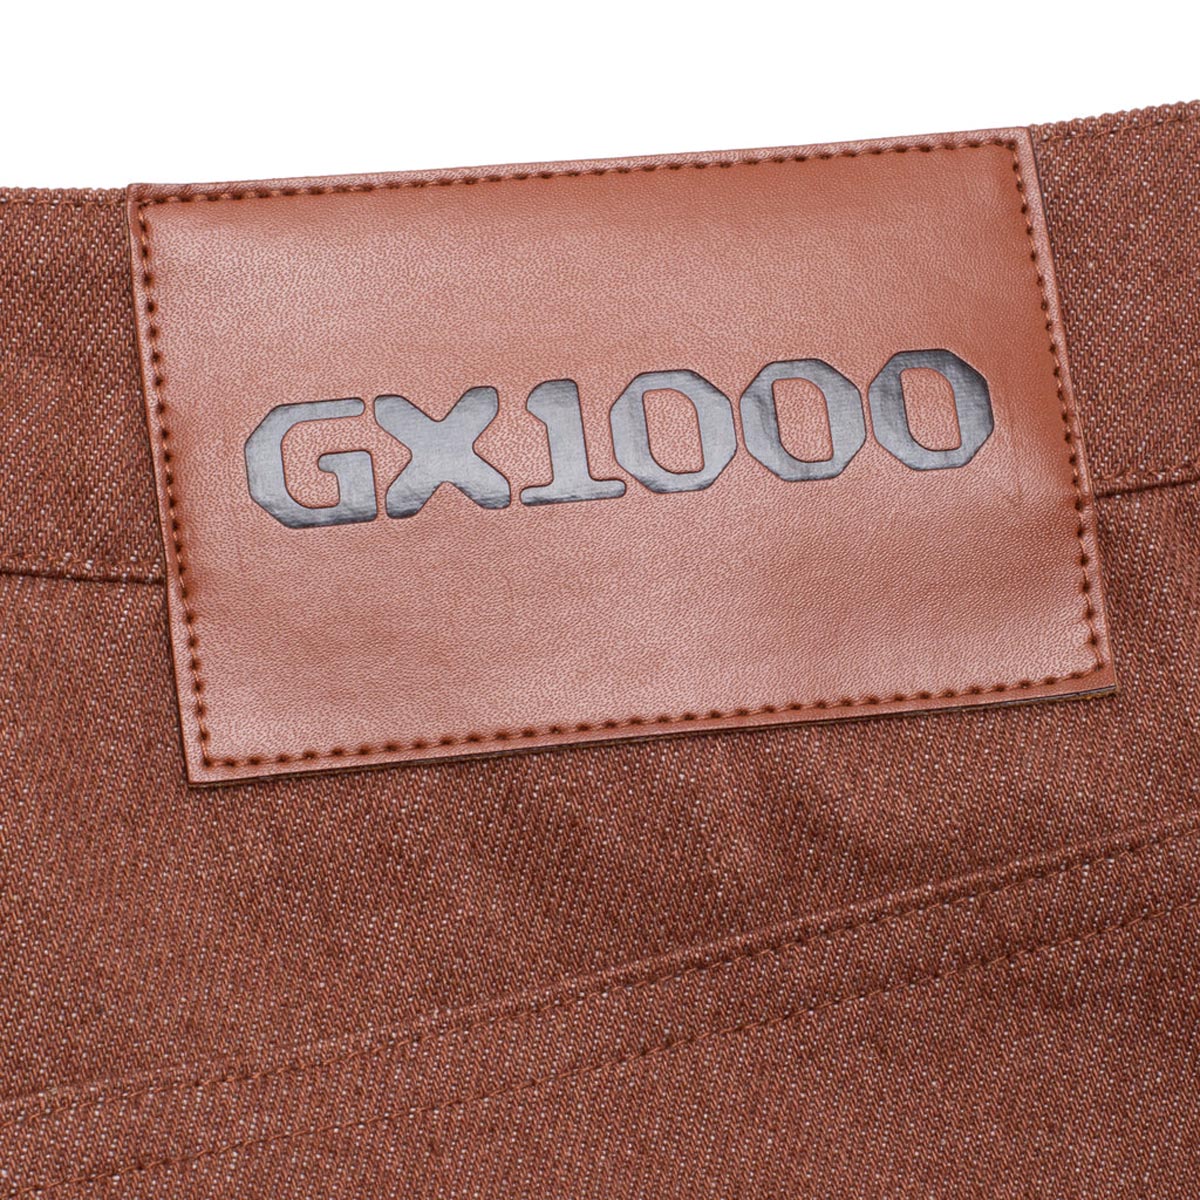 GX1000 Baggy Pants - Brown image 5